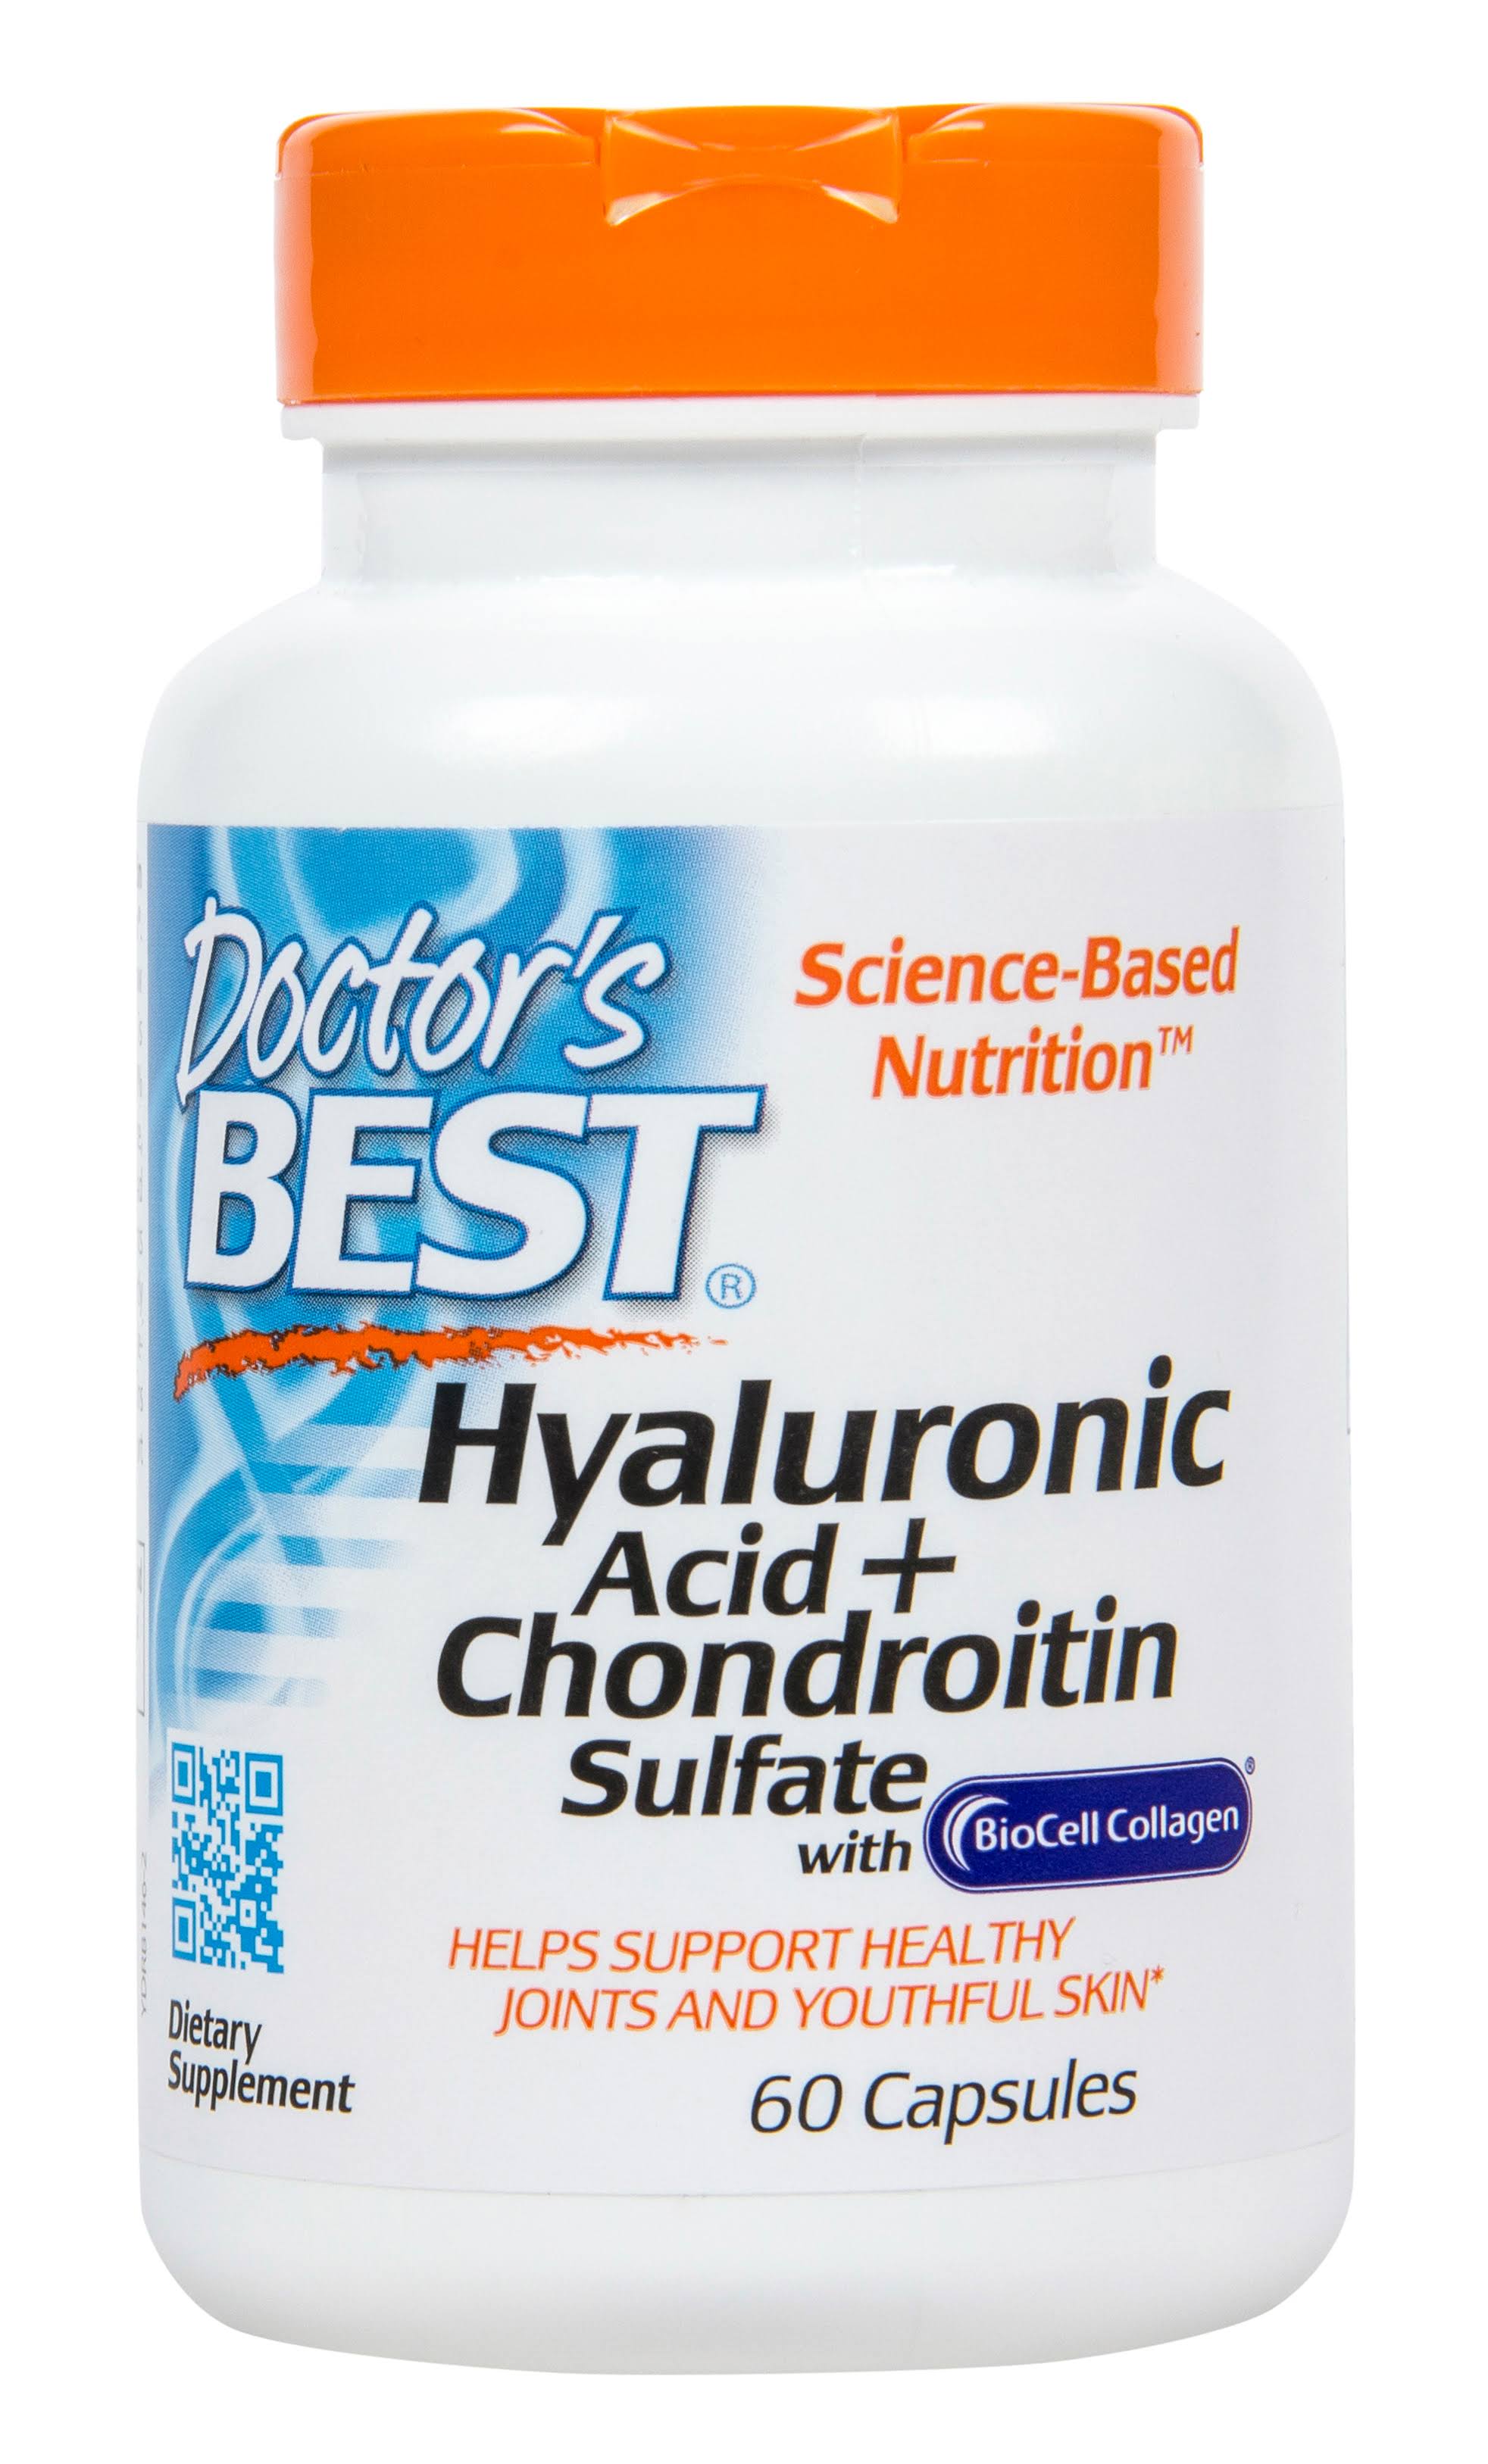 Doctor's Best Best Hyaluronic Acid Dietary Supplement - 60 Capsules